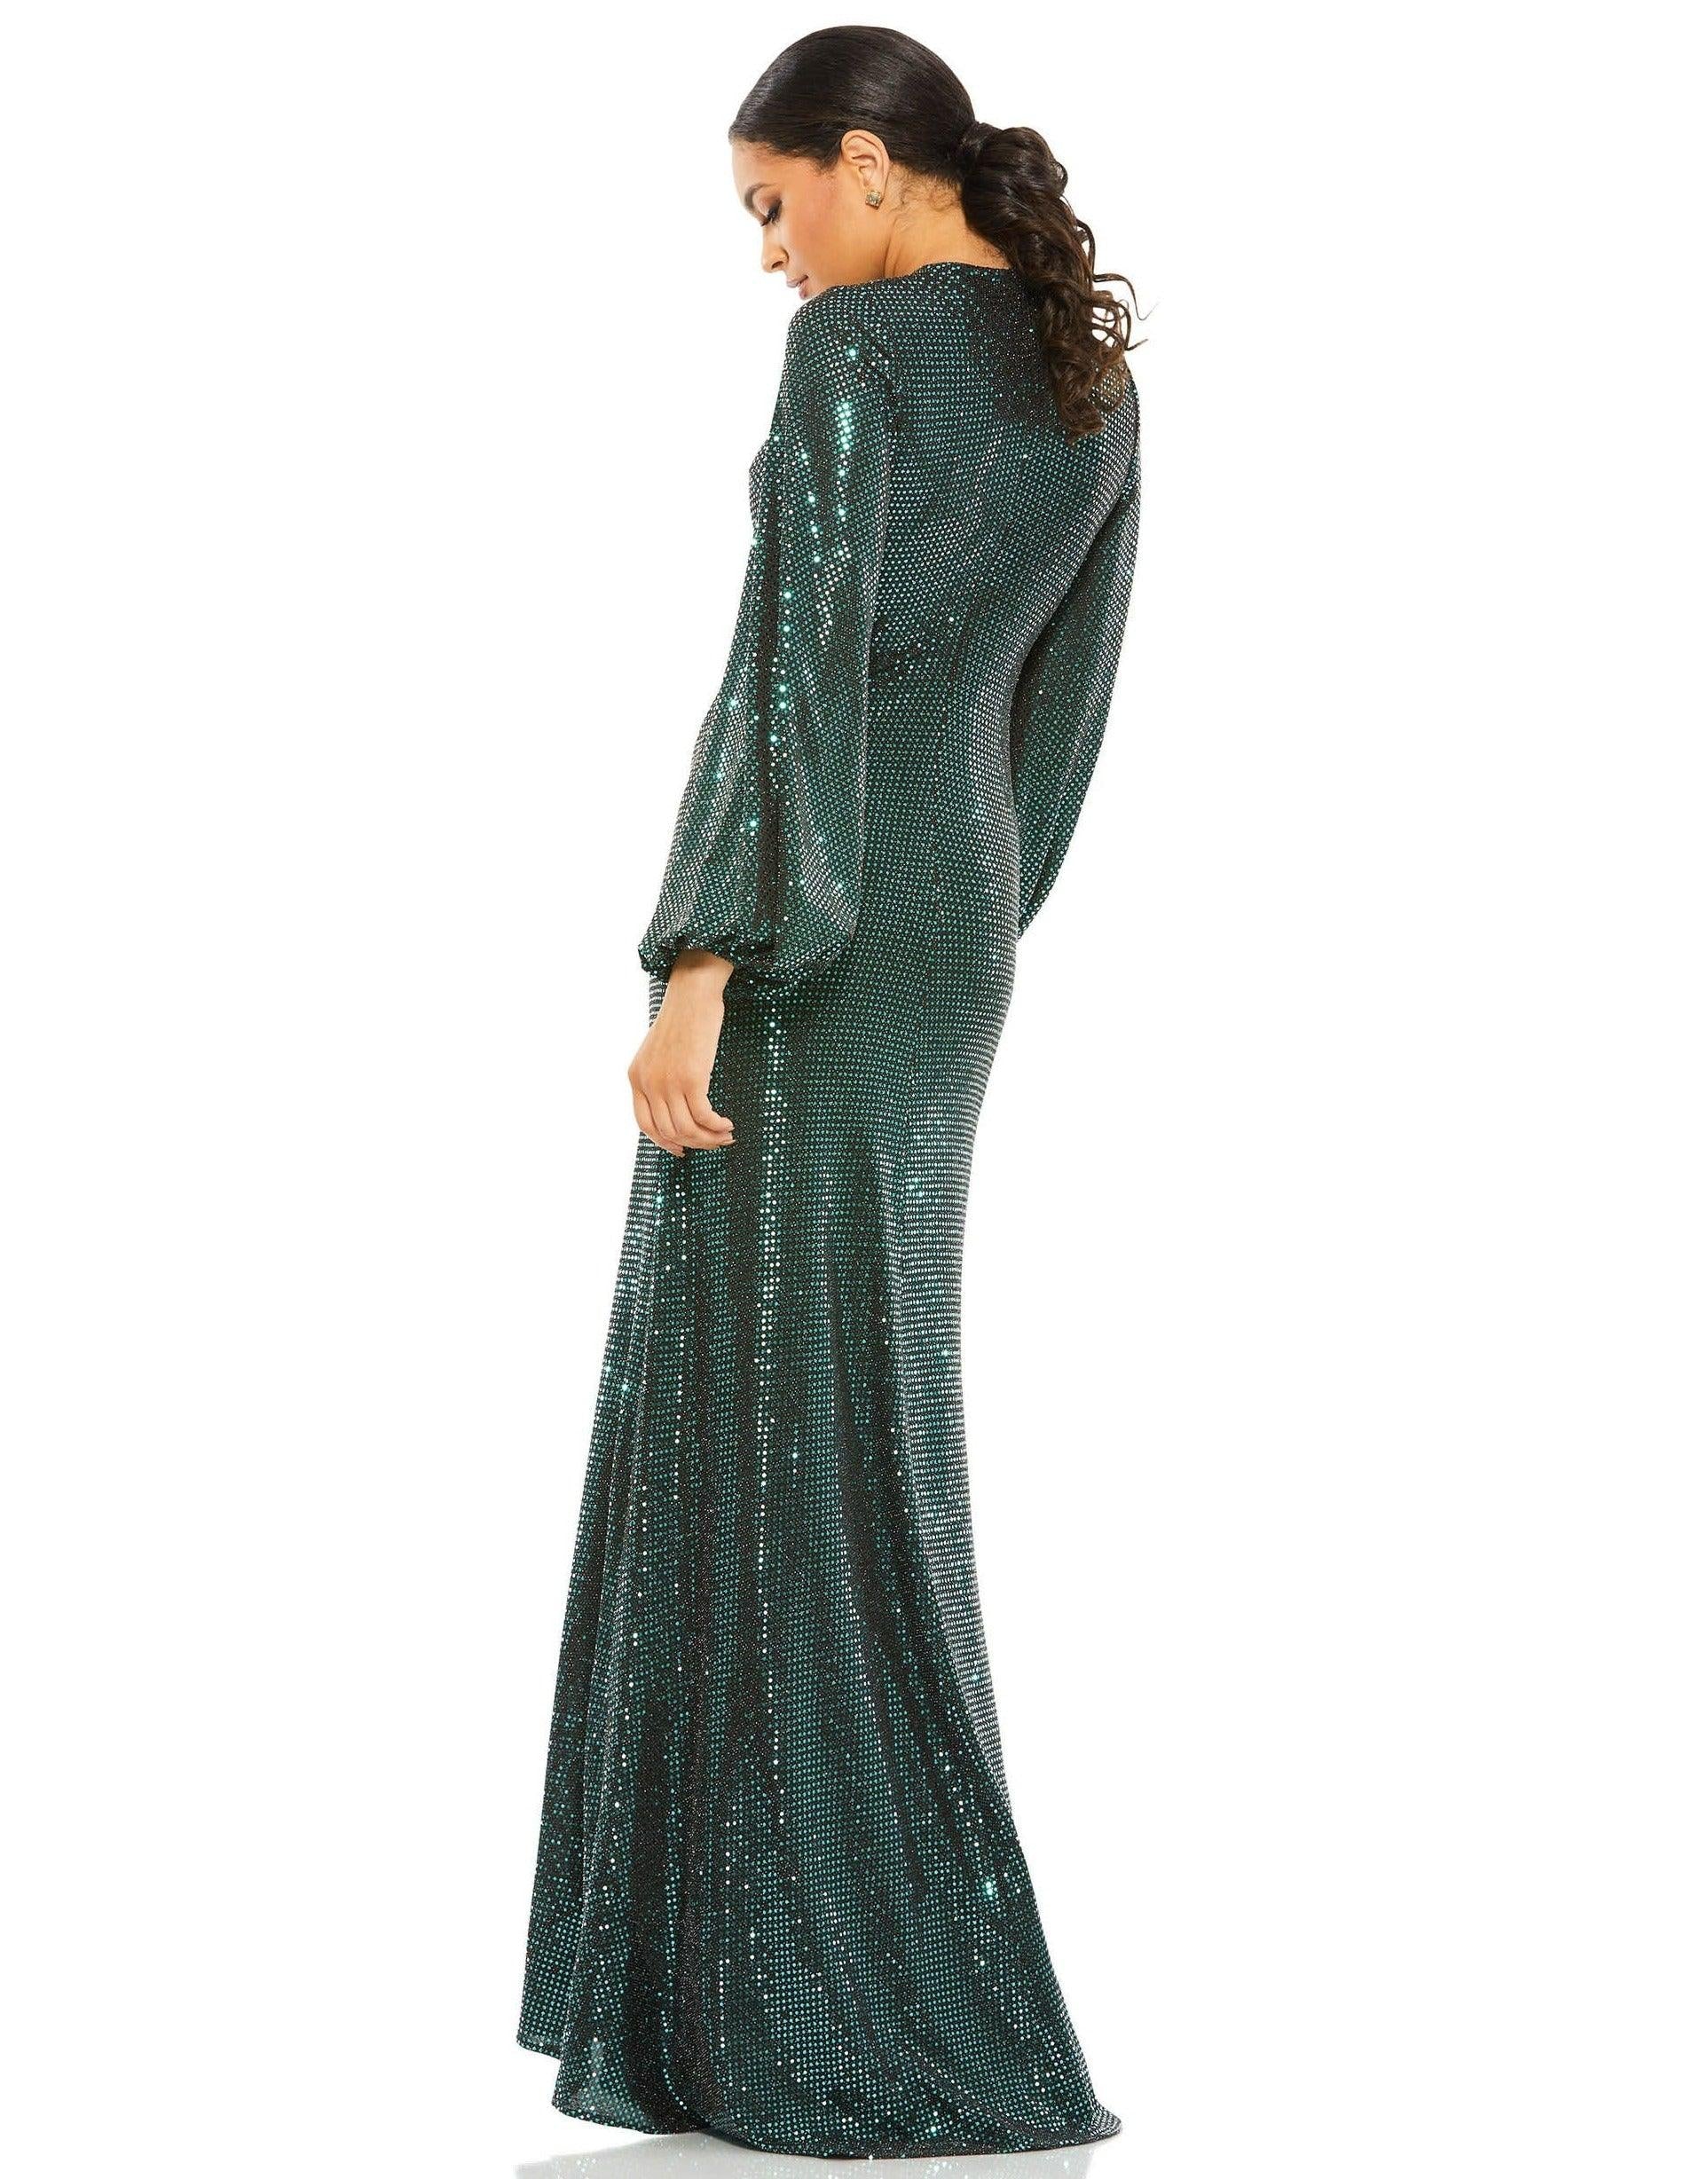 Daymor Couture 665 Blouson-Style Formal Dress - MadameBridal.com